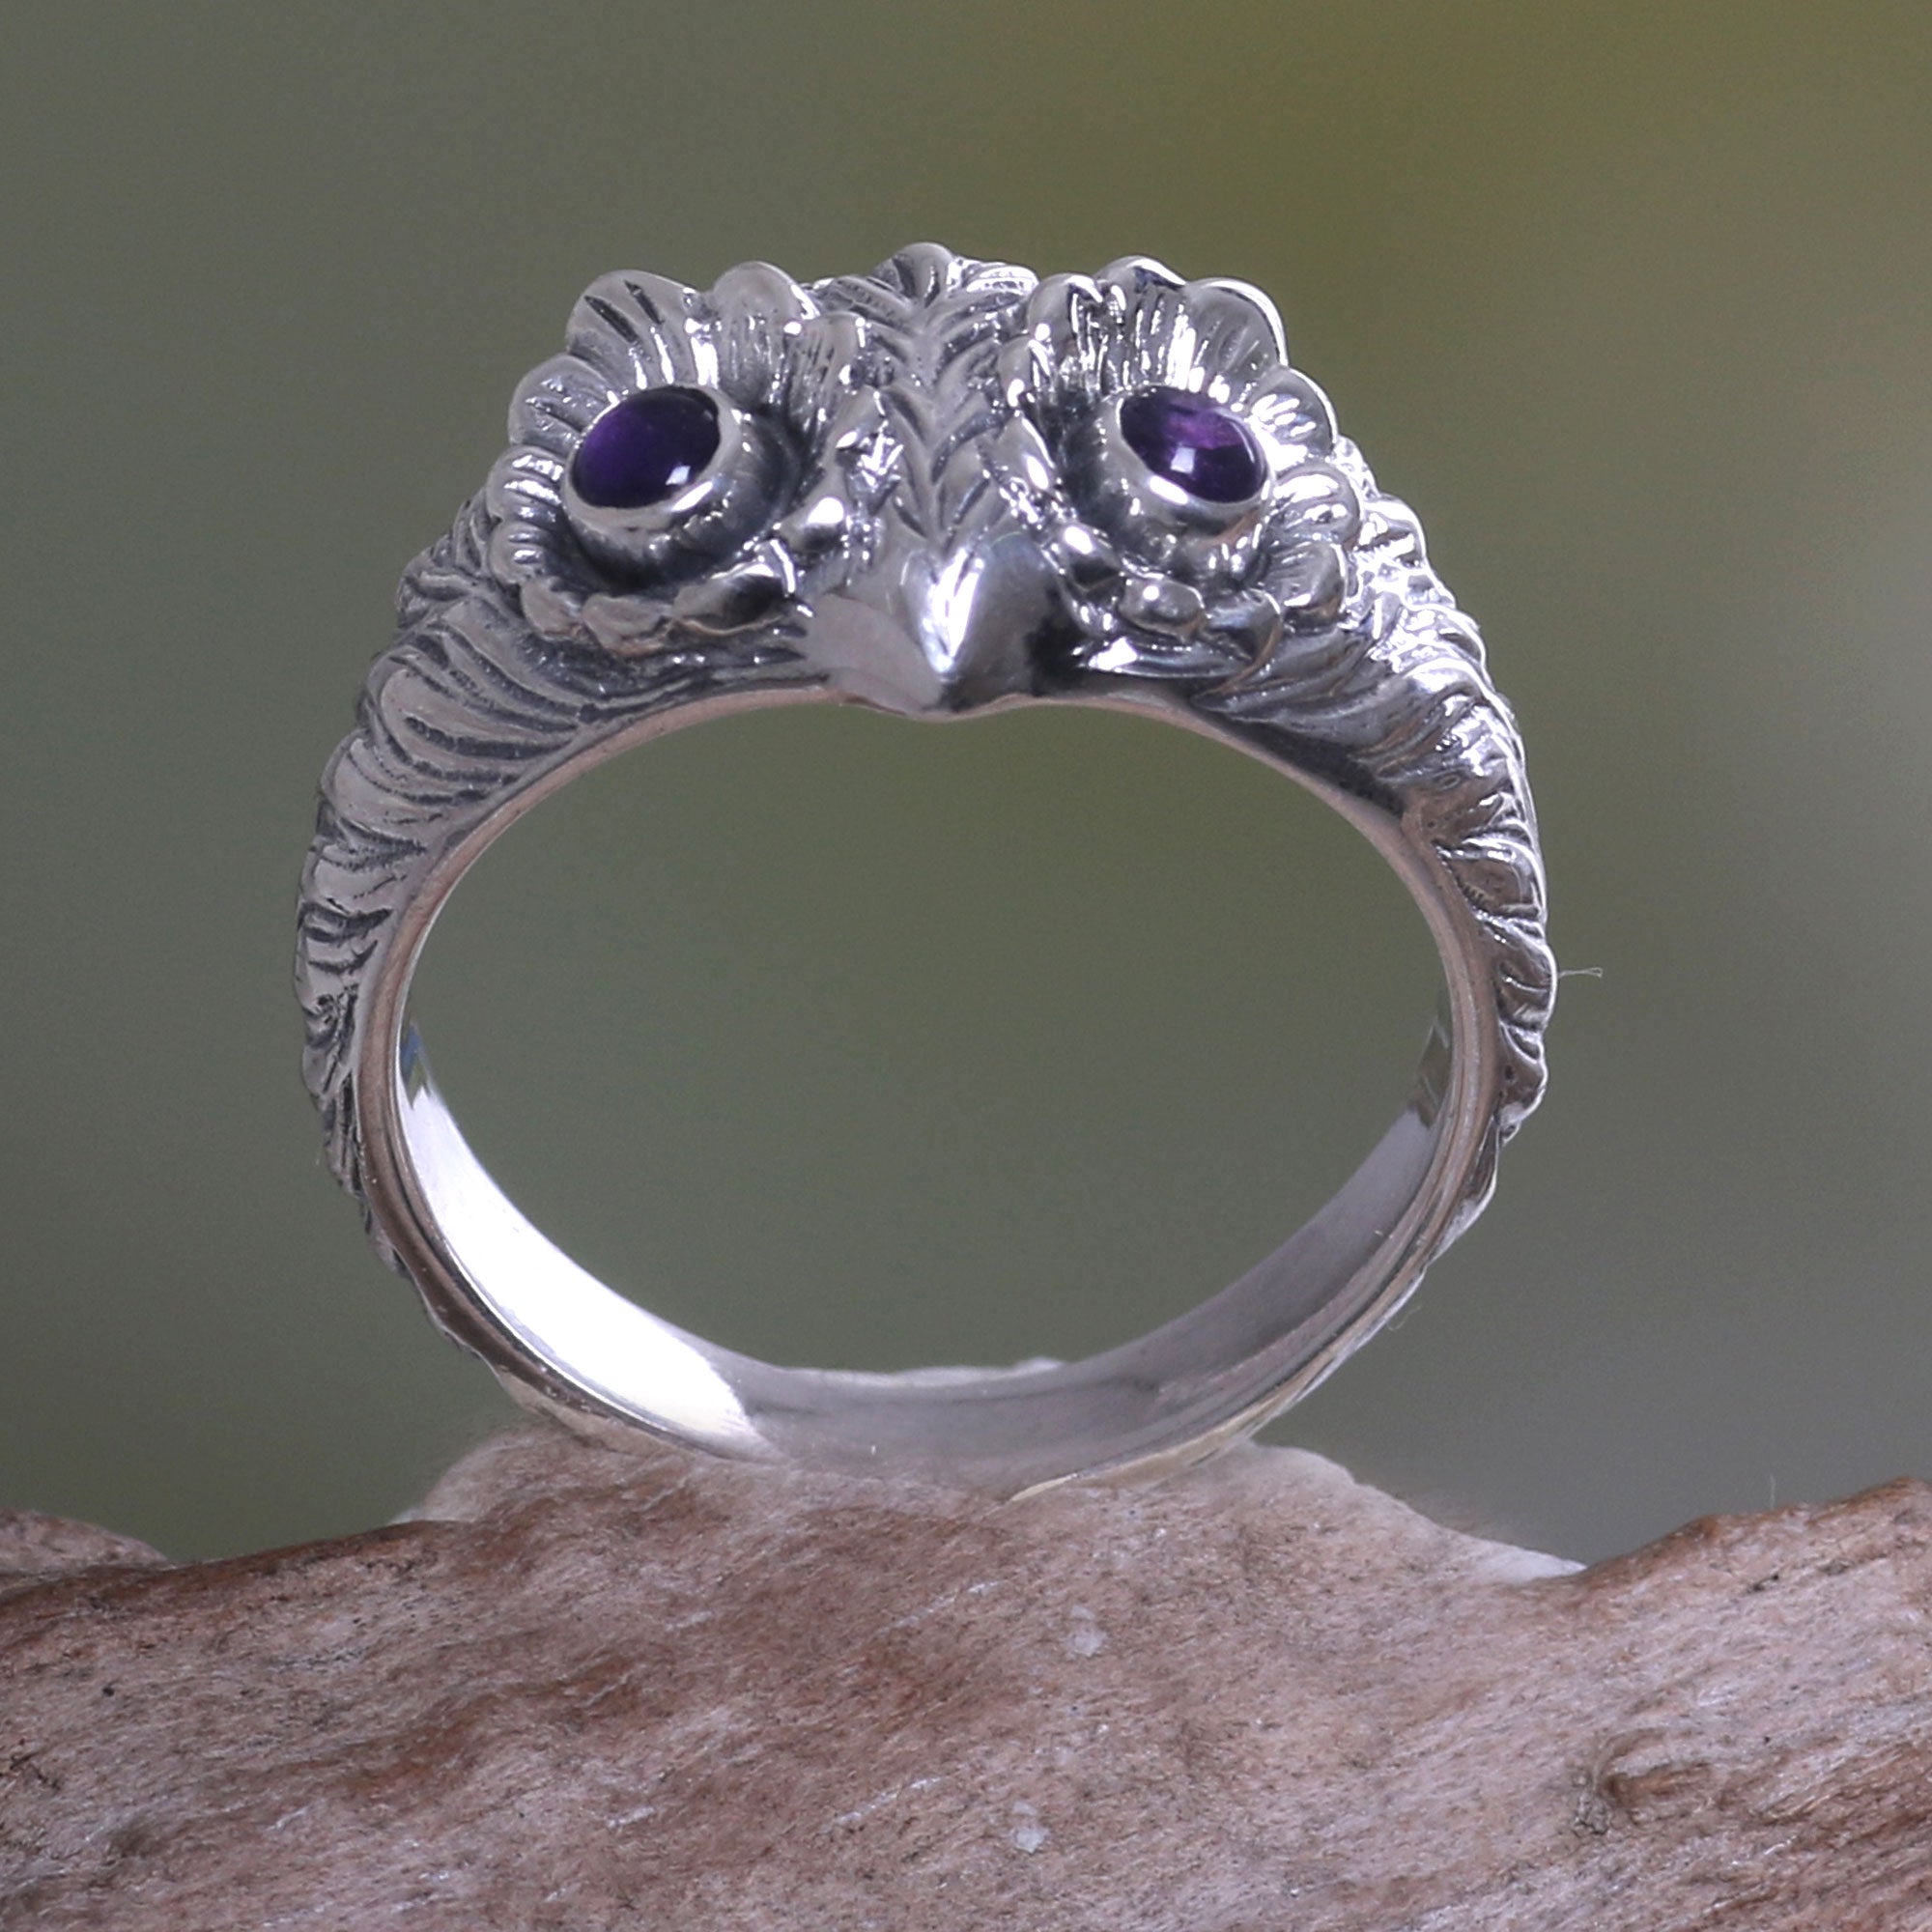 NOVICA Owl Wisdom Amethyst & Silver Band Ring - Size 5